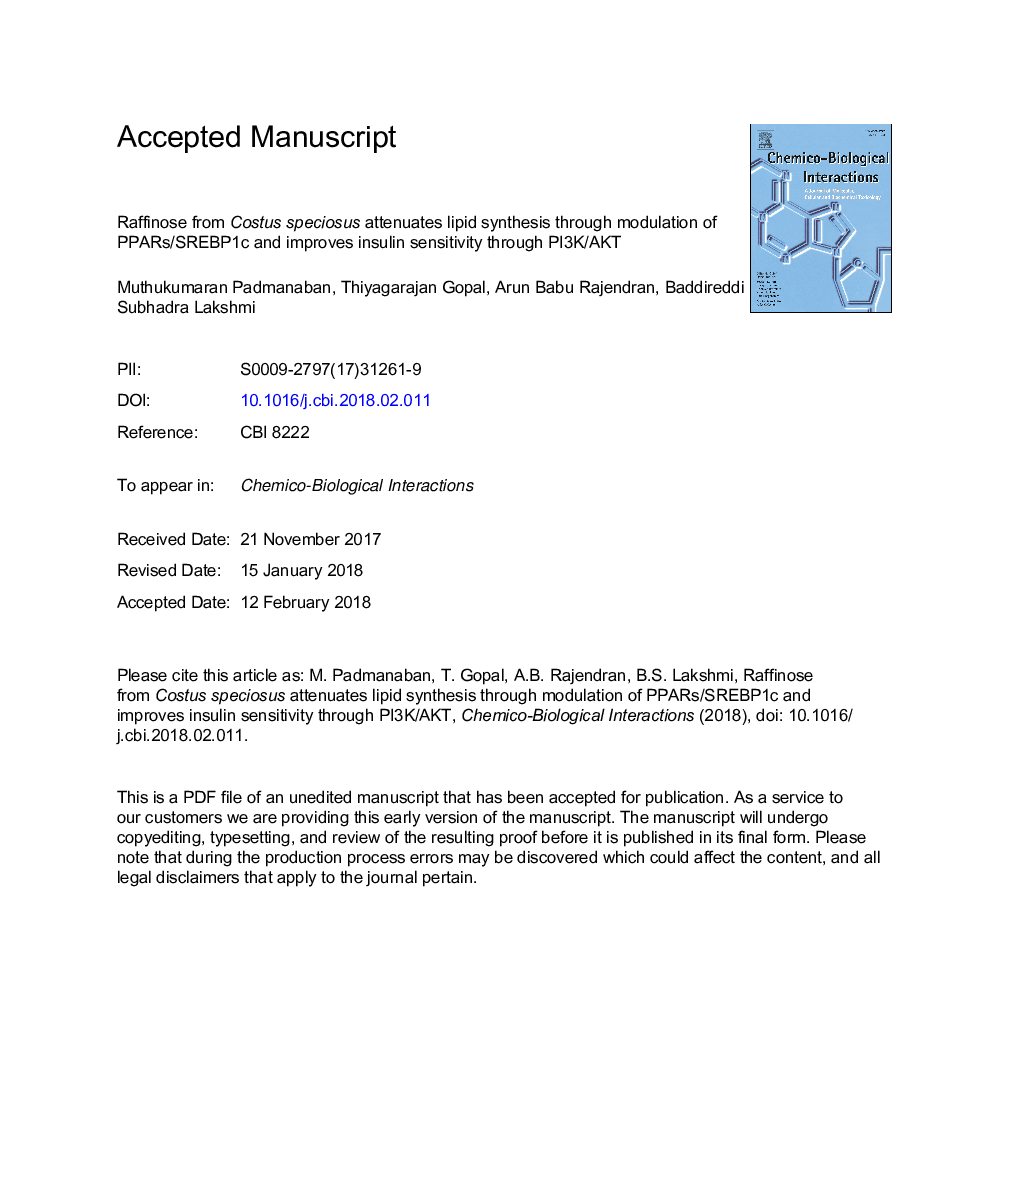 Raffinose from Costus speciosus attenuates lipid synthesis through modulation of PPARs/SREBP1c and improves insulin sensitivity through PI3K/AKT